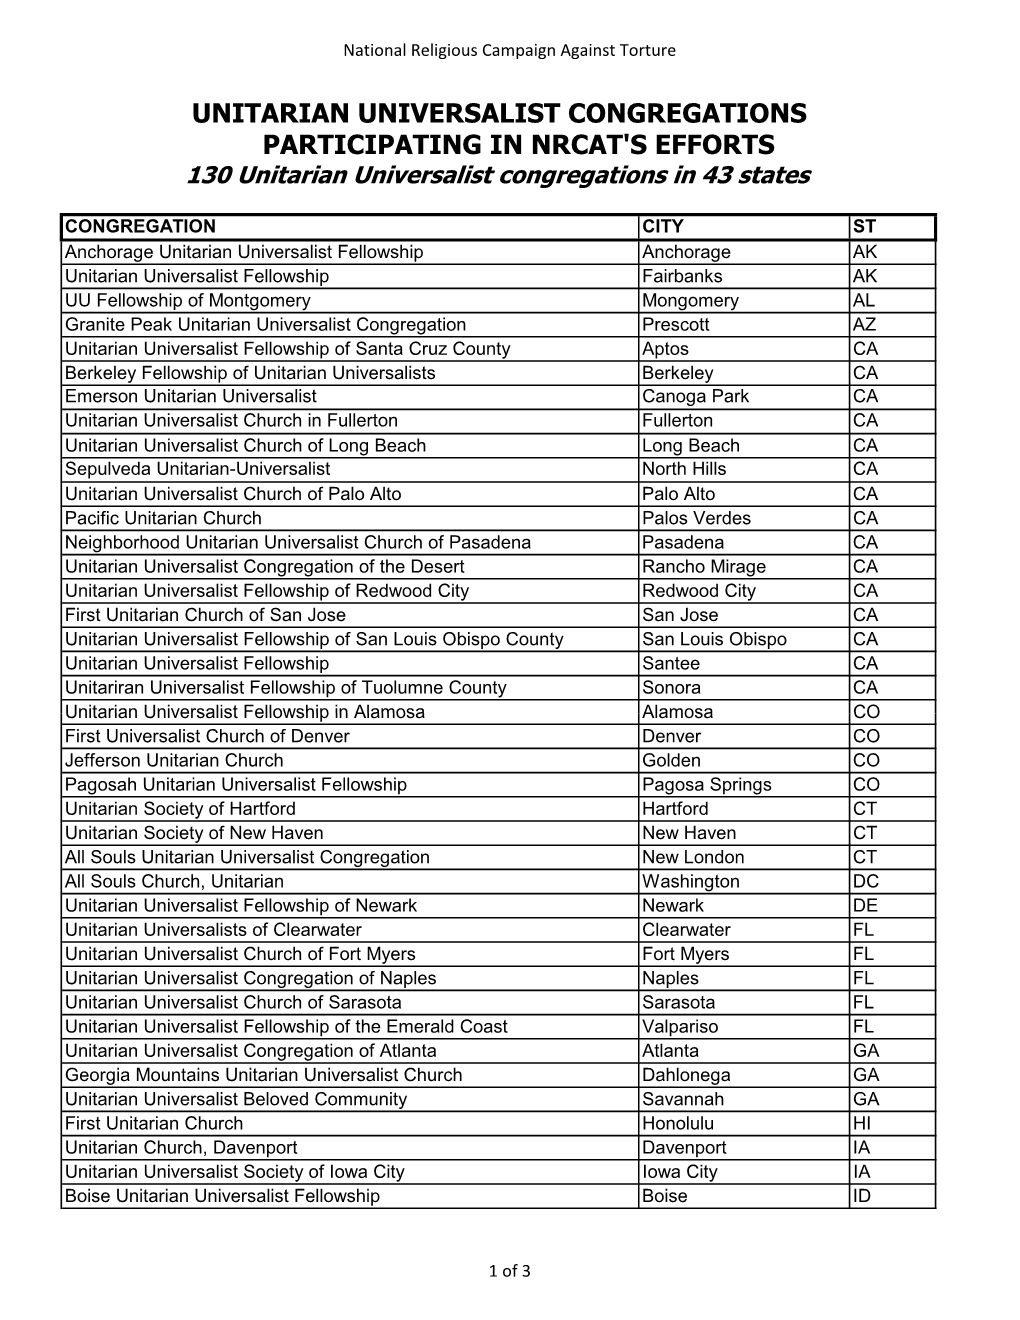 UNITARIAN UNIVERSALIST CONGREGATIONS PARTICIPATING in NRCAT's EFFORTS 130 Unitarian Universalist Congregations in 43 States